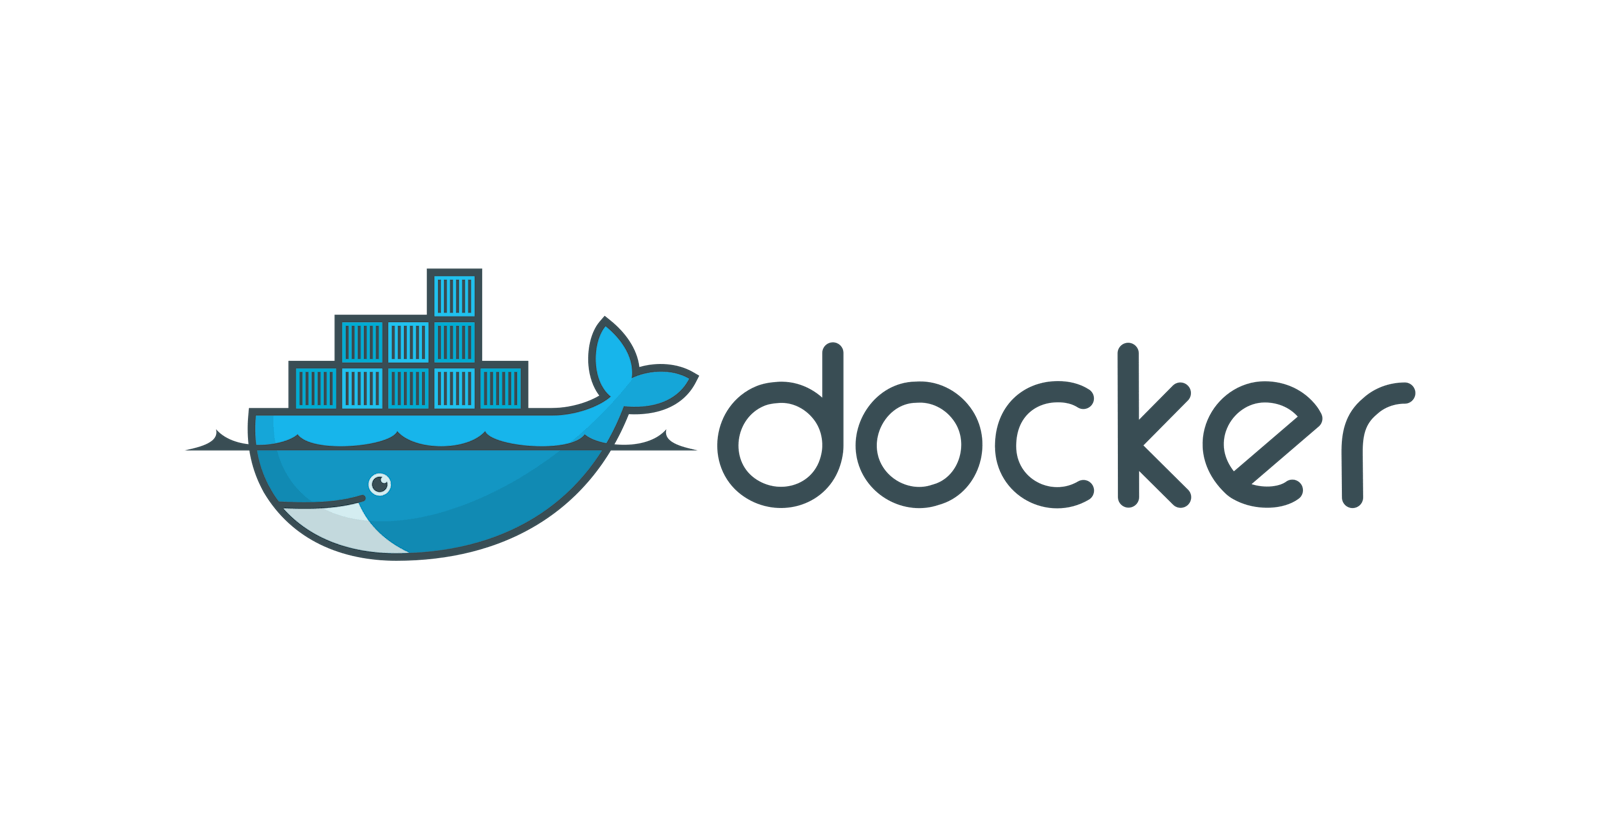 Dockerfile best practices